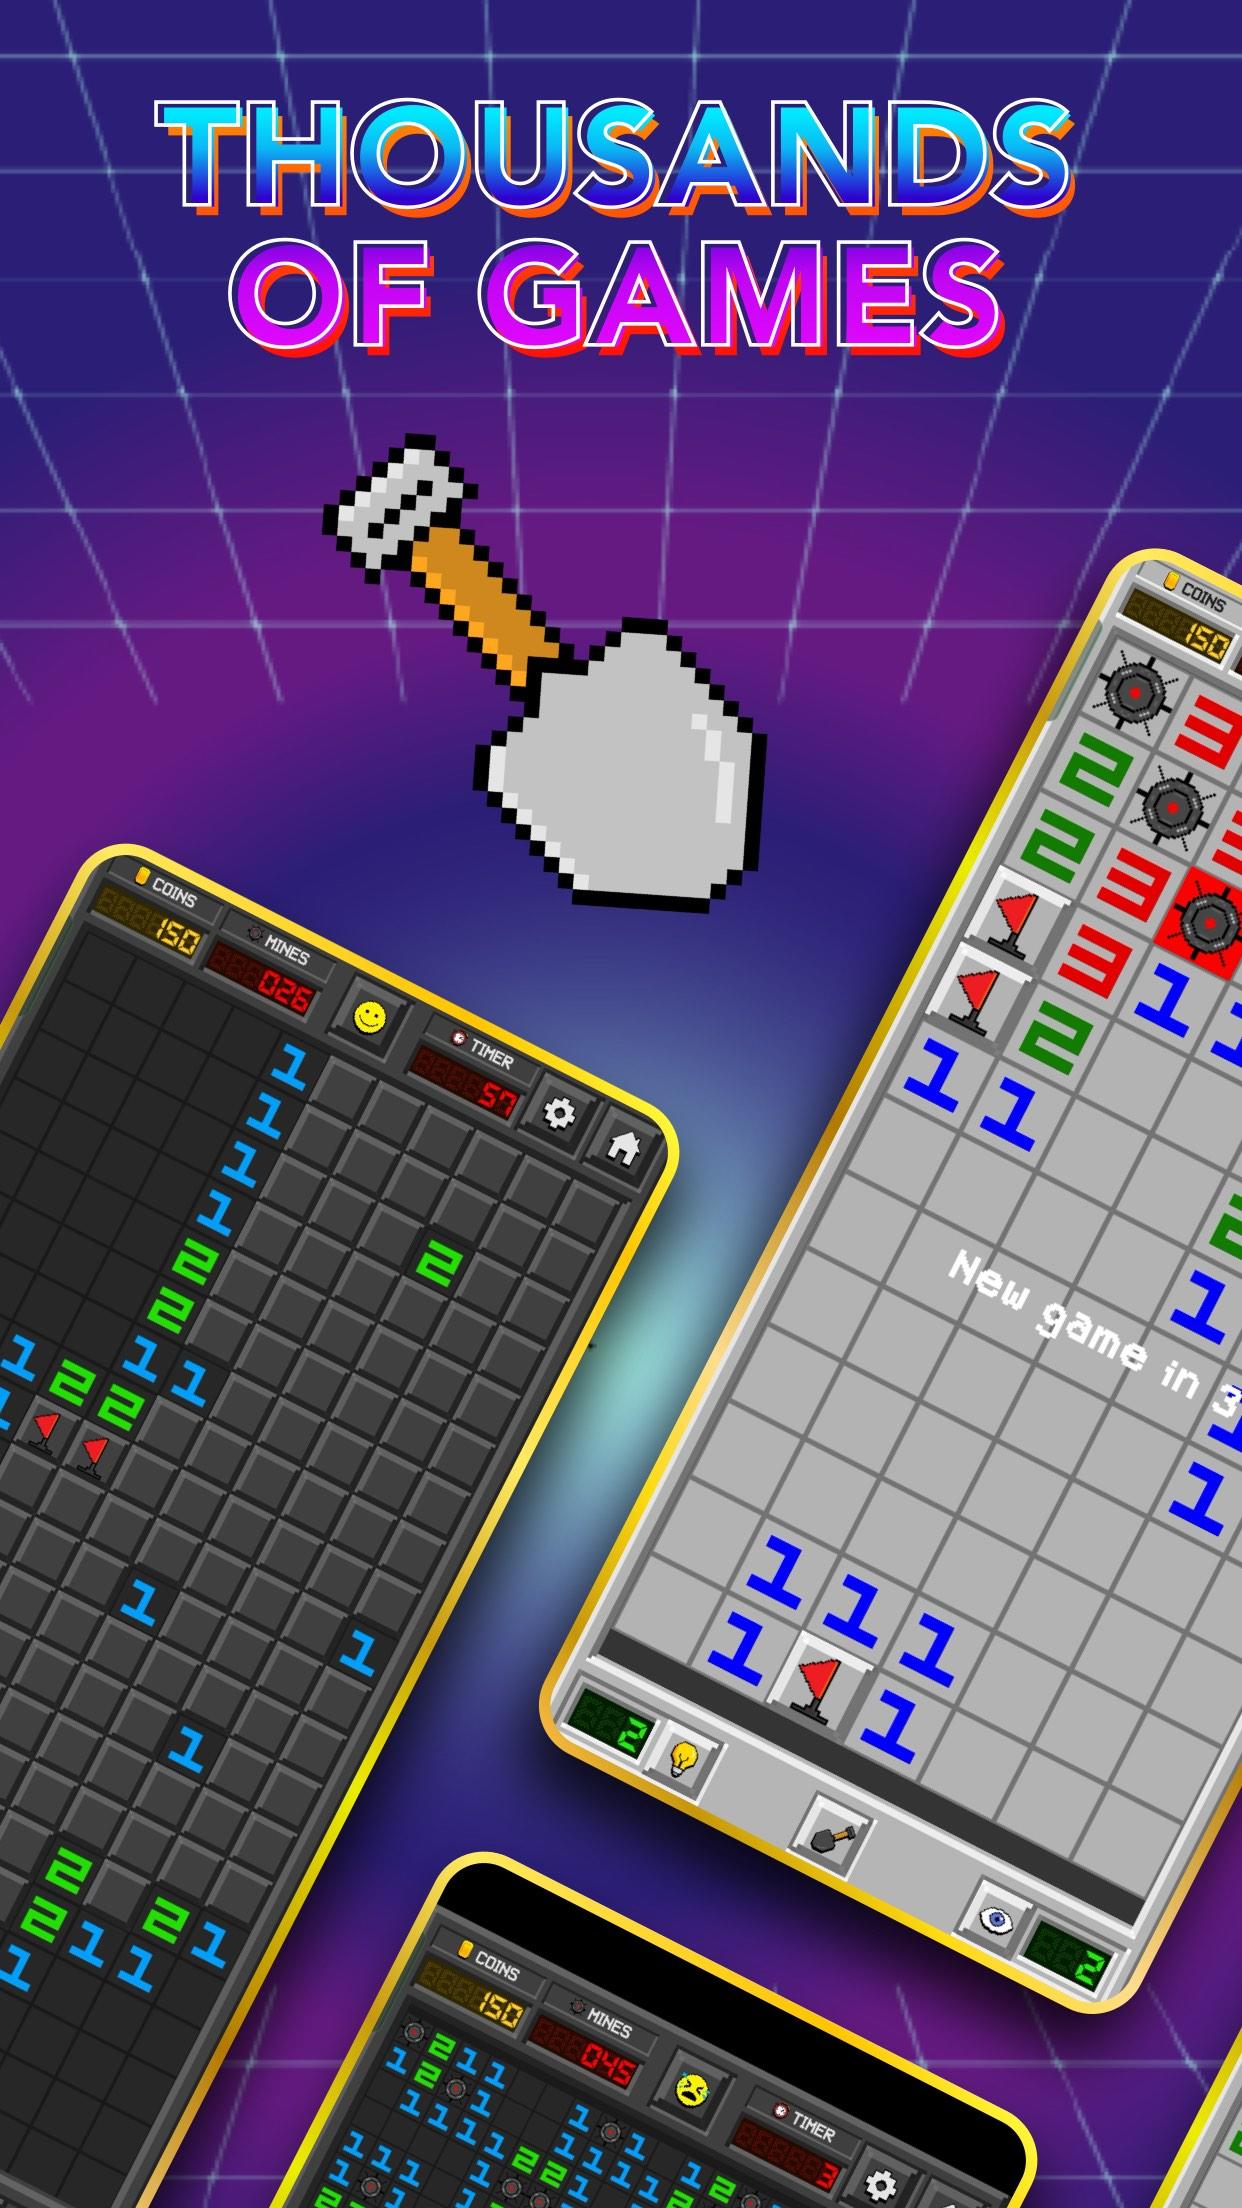 Minesweeper Classic Gameのキャプチャ